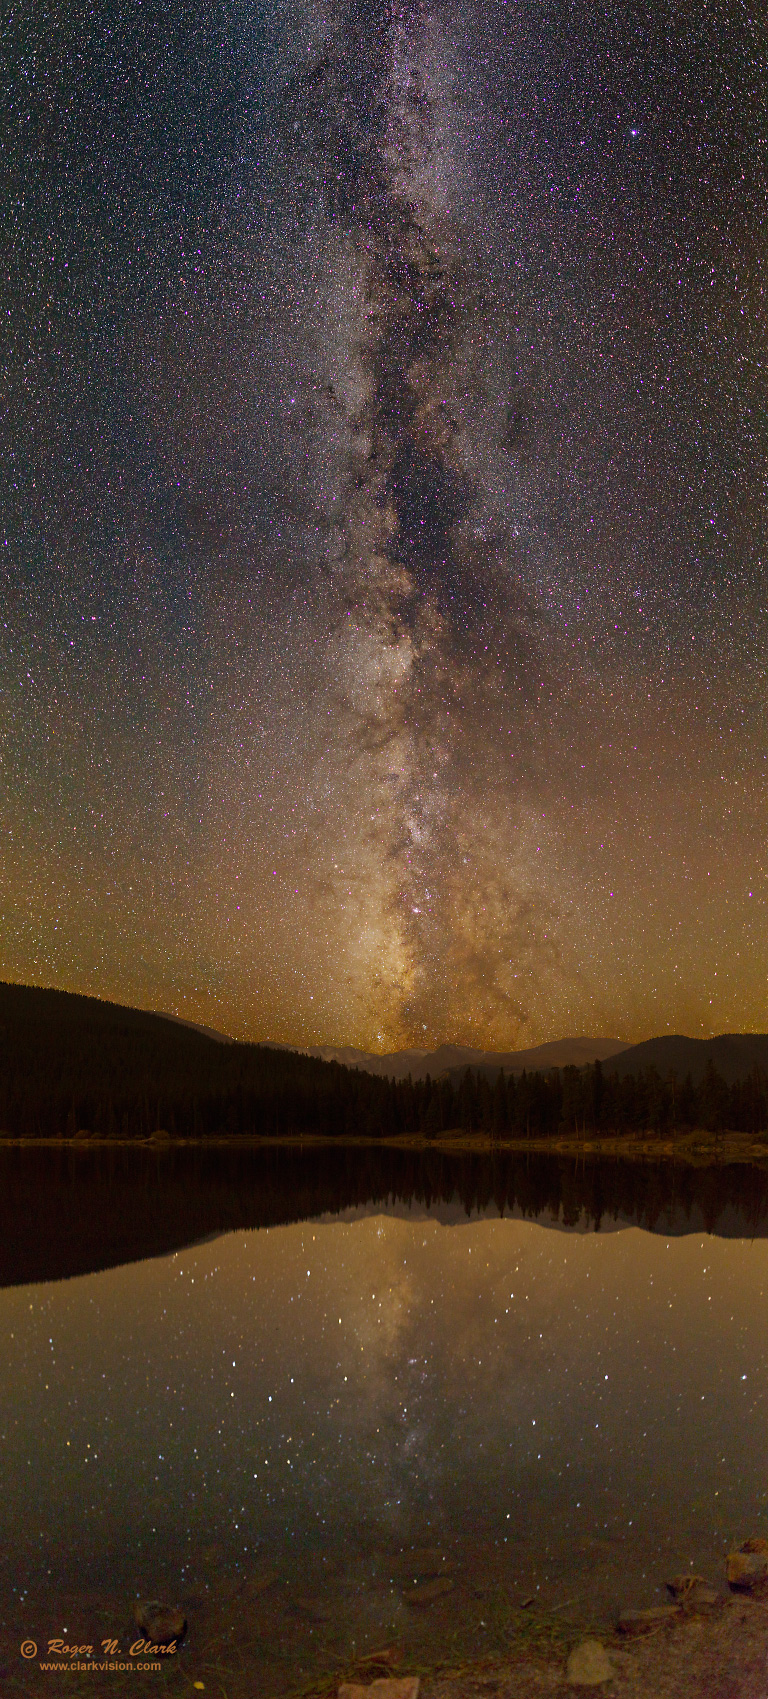 image night.sky.echo.lake.reflection.c09.18.2012.C45I1103-09.g-bin6x6-1699v.jpg is Copyrighted by Roger N. Clark, www.clarkvision.com